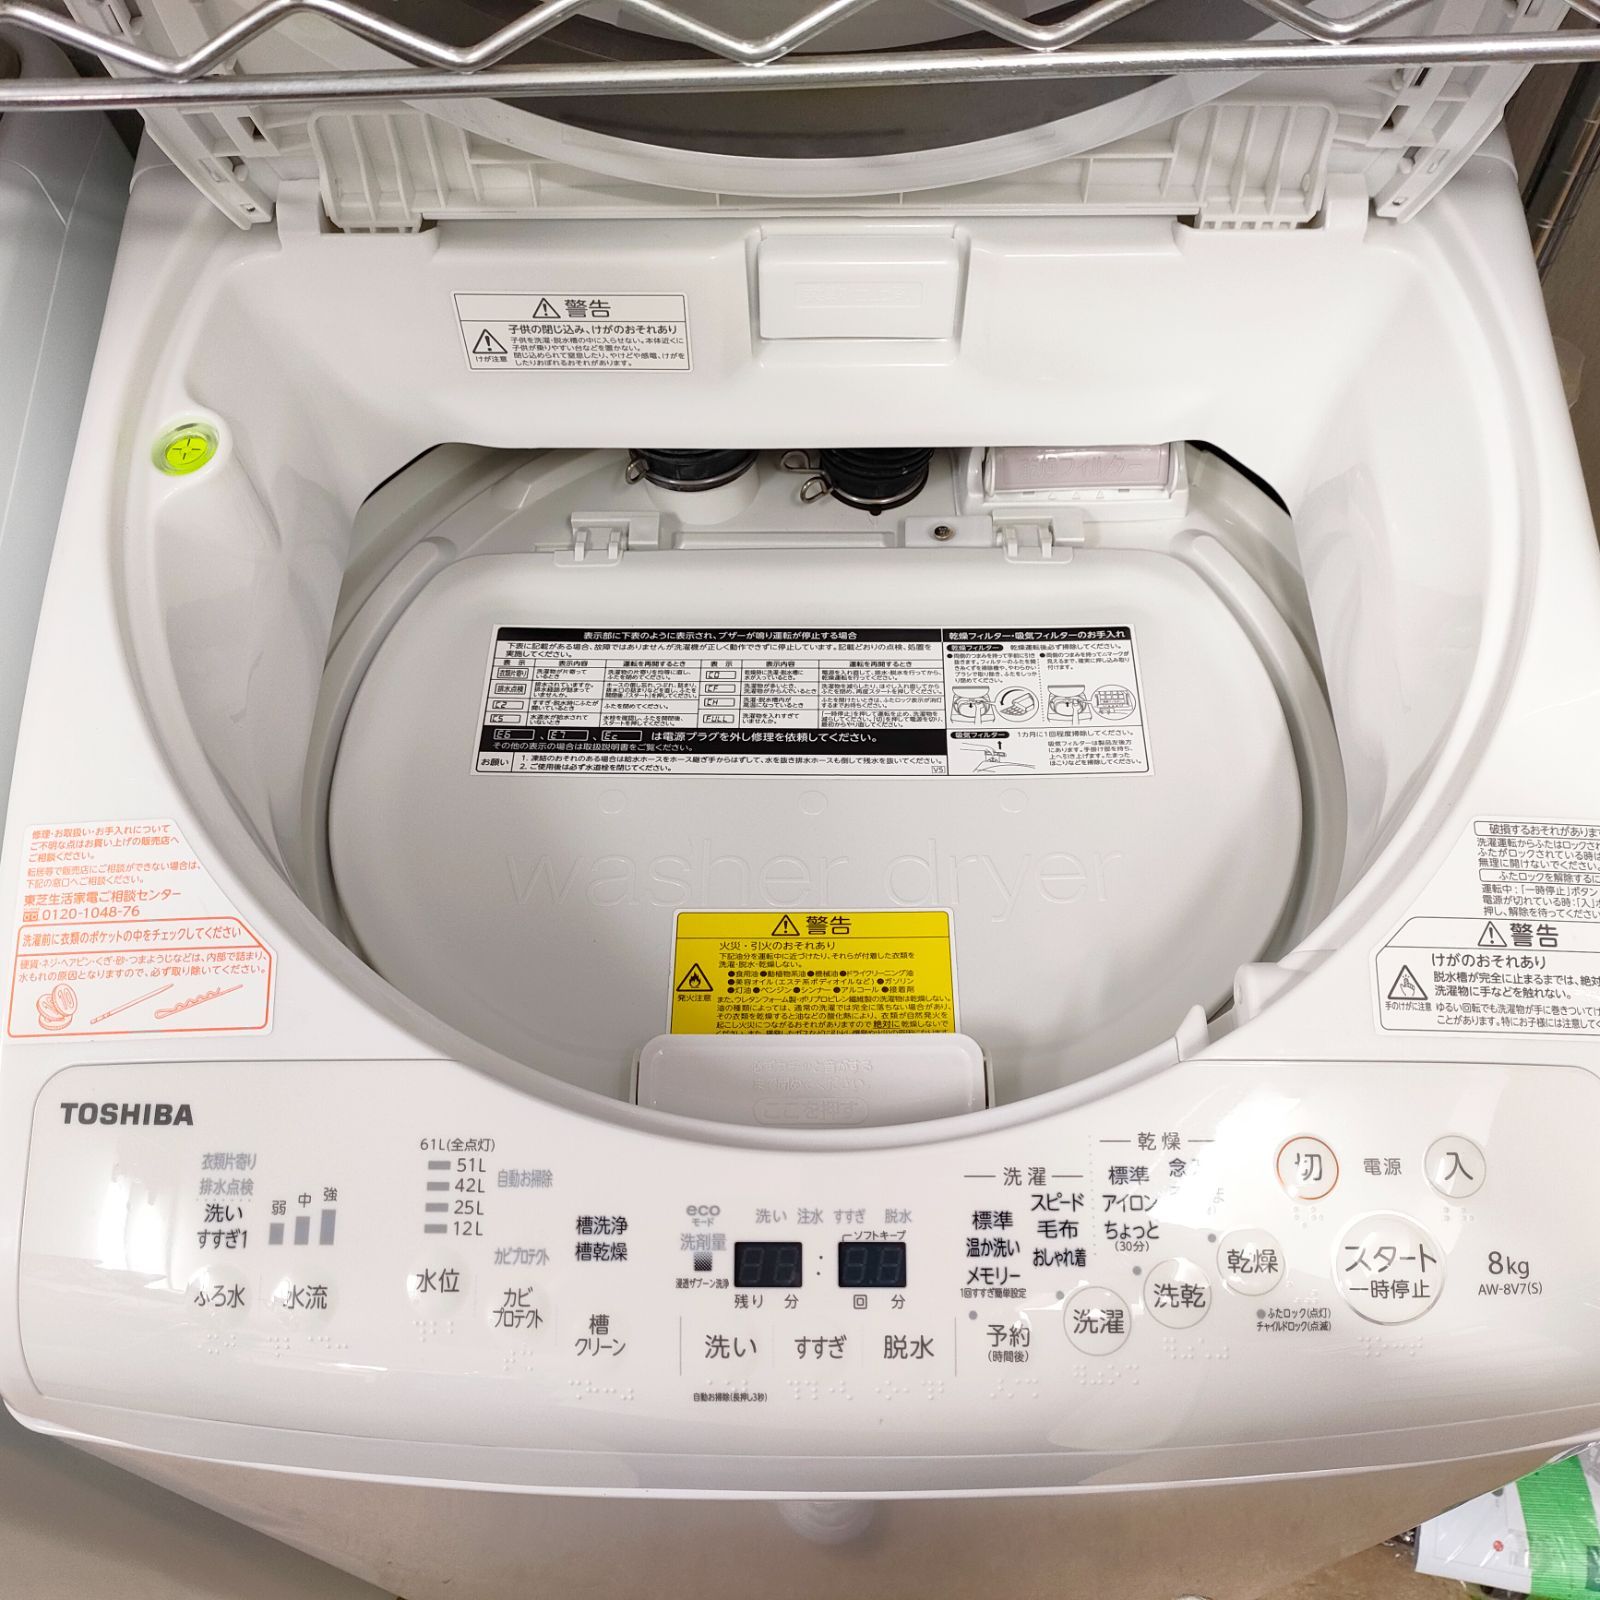 9*93 TOSHIBA 東芝 AW-8V7 ZABOON 8.0kg 全自動洗濯乾燥機 18年製 